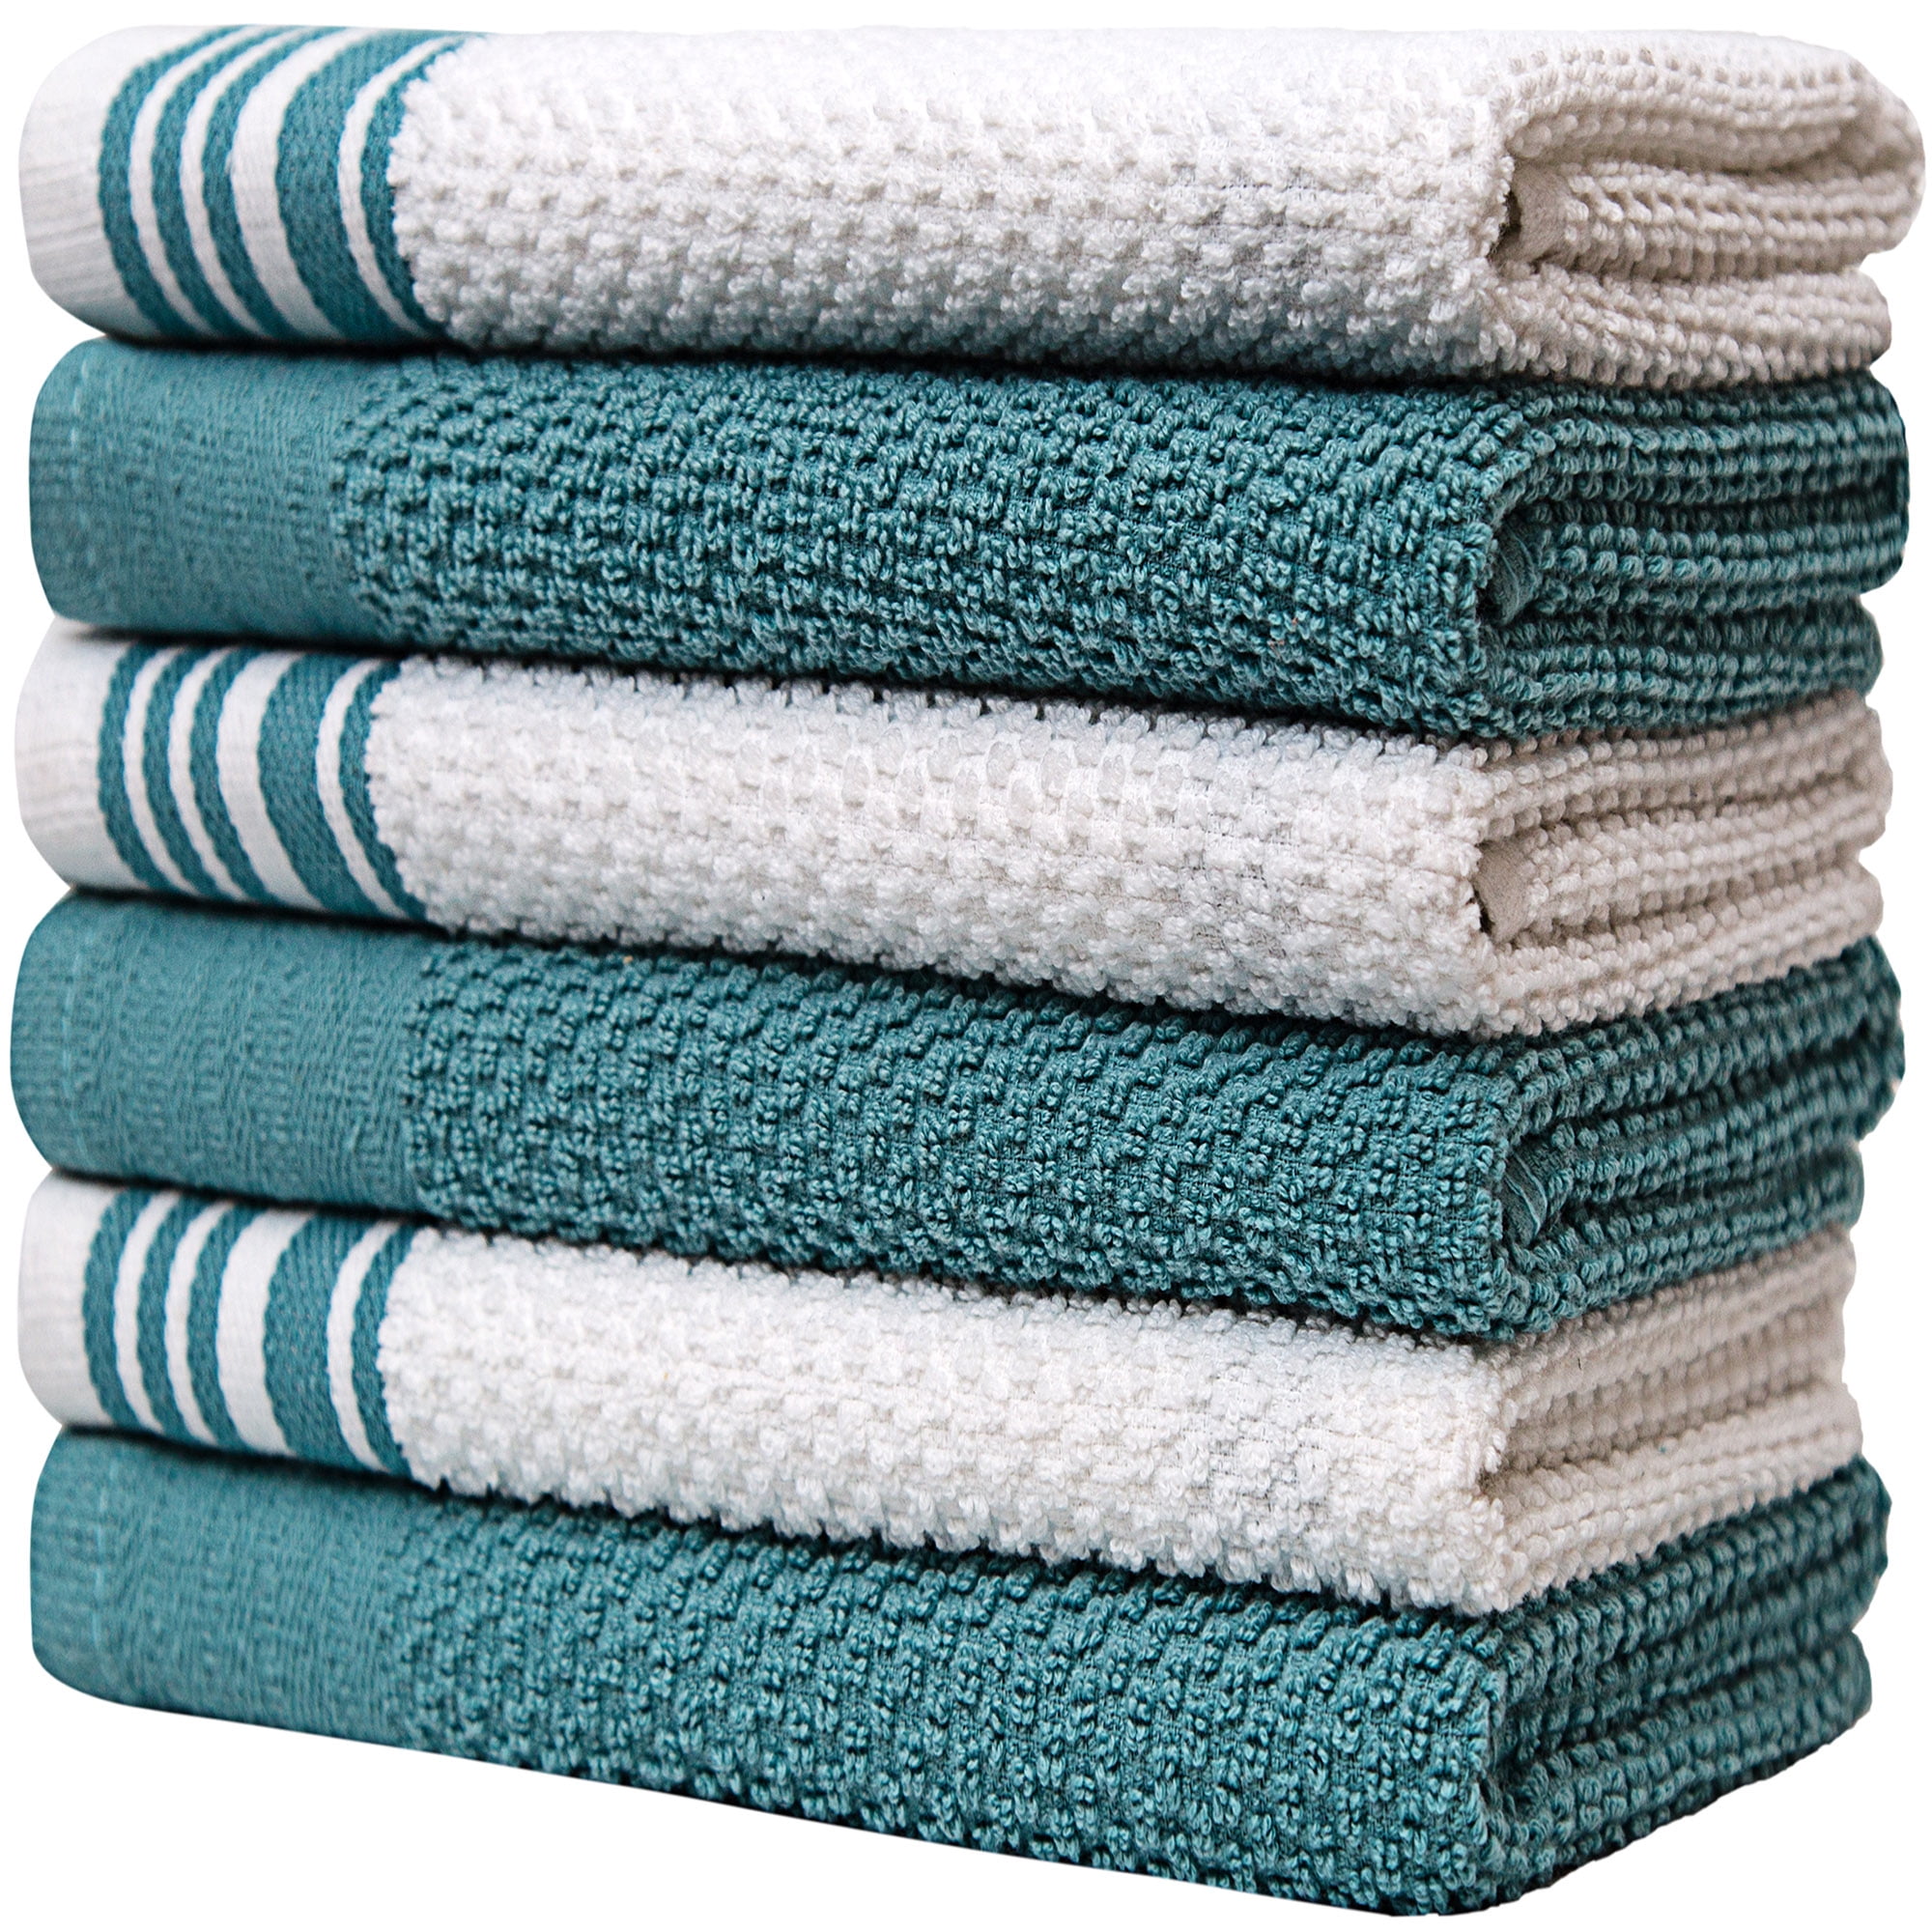 Premium Kitchen Towels (16”x 28”, 6 Pack) Large Cotton Kitchen Hand